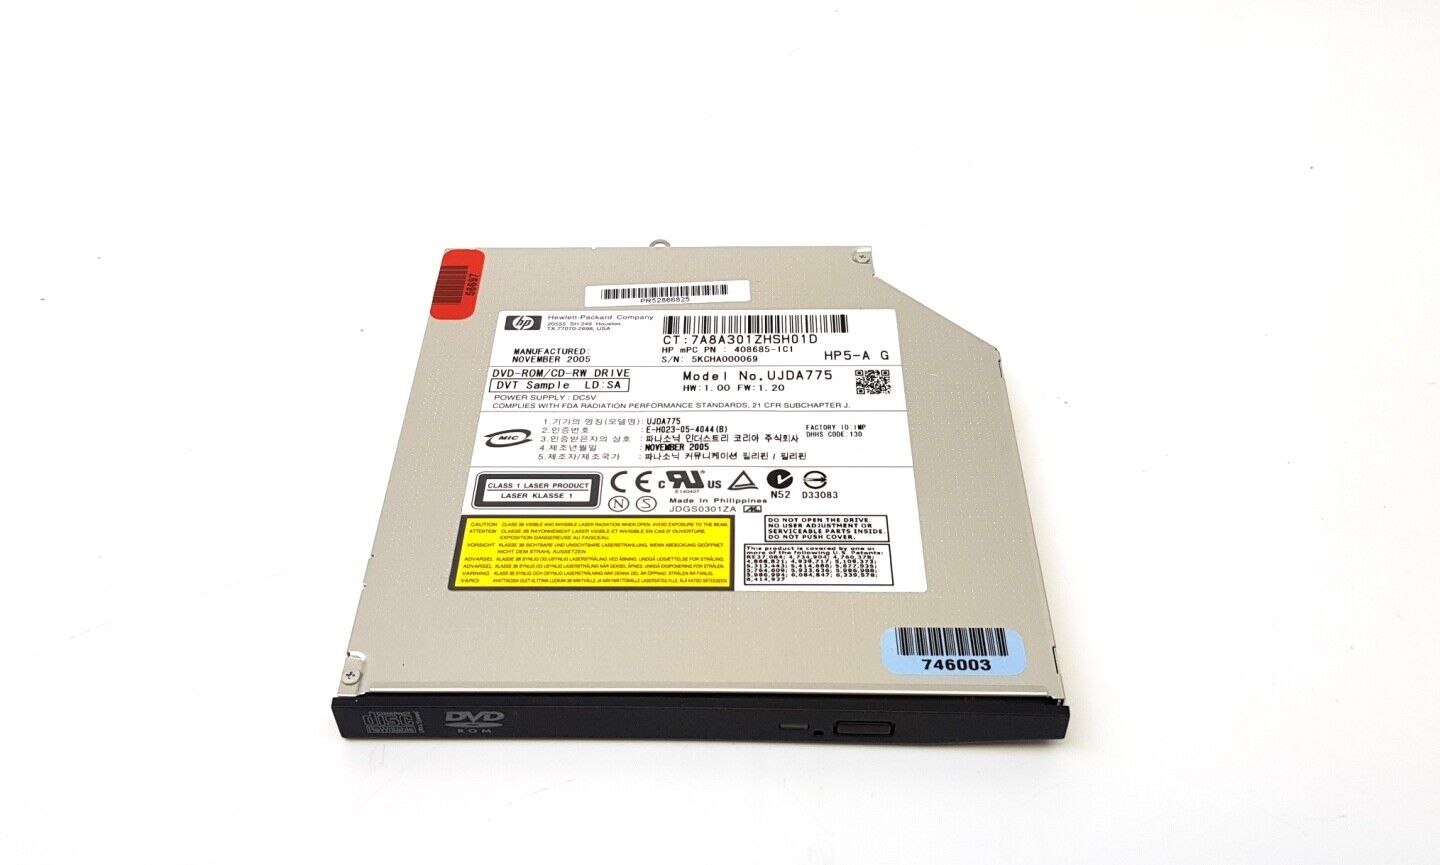 HP UJDA775 DVD-ROM CD-RW Optical Laptop Drive 408685-1C1